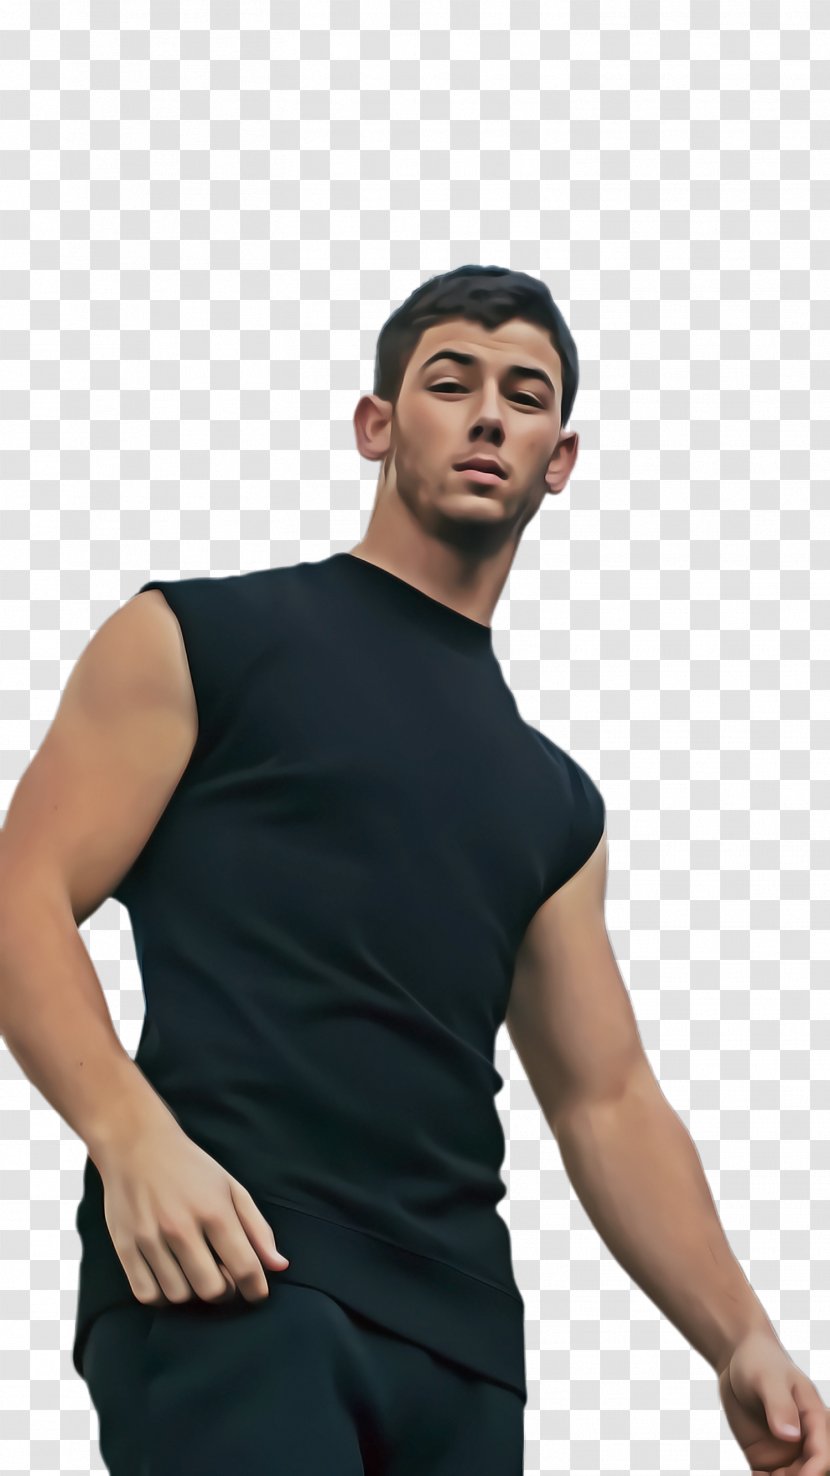 Clothing Black T-shirt Neck Arm - Tshirt - Muscle Sleeveless Shirt Transparent PNG